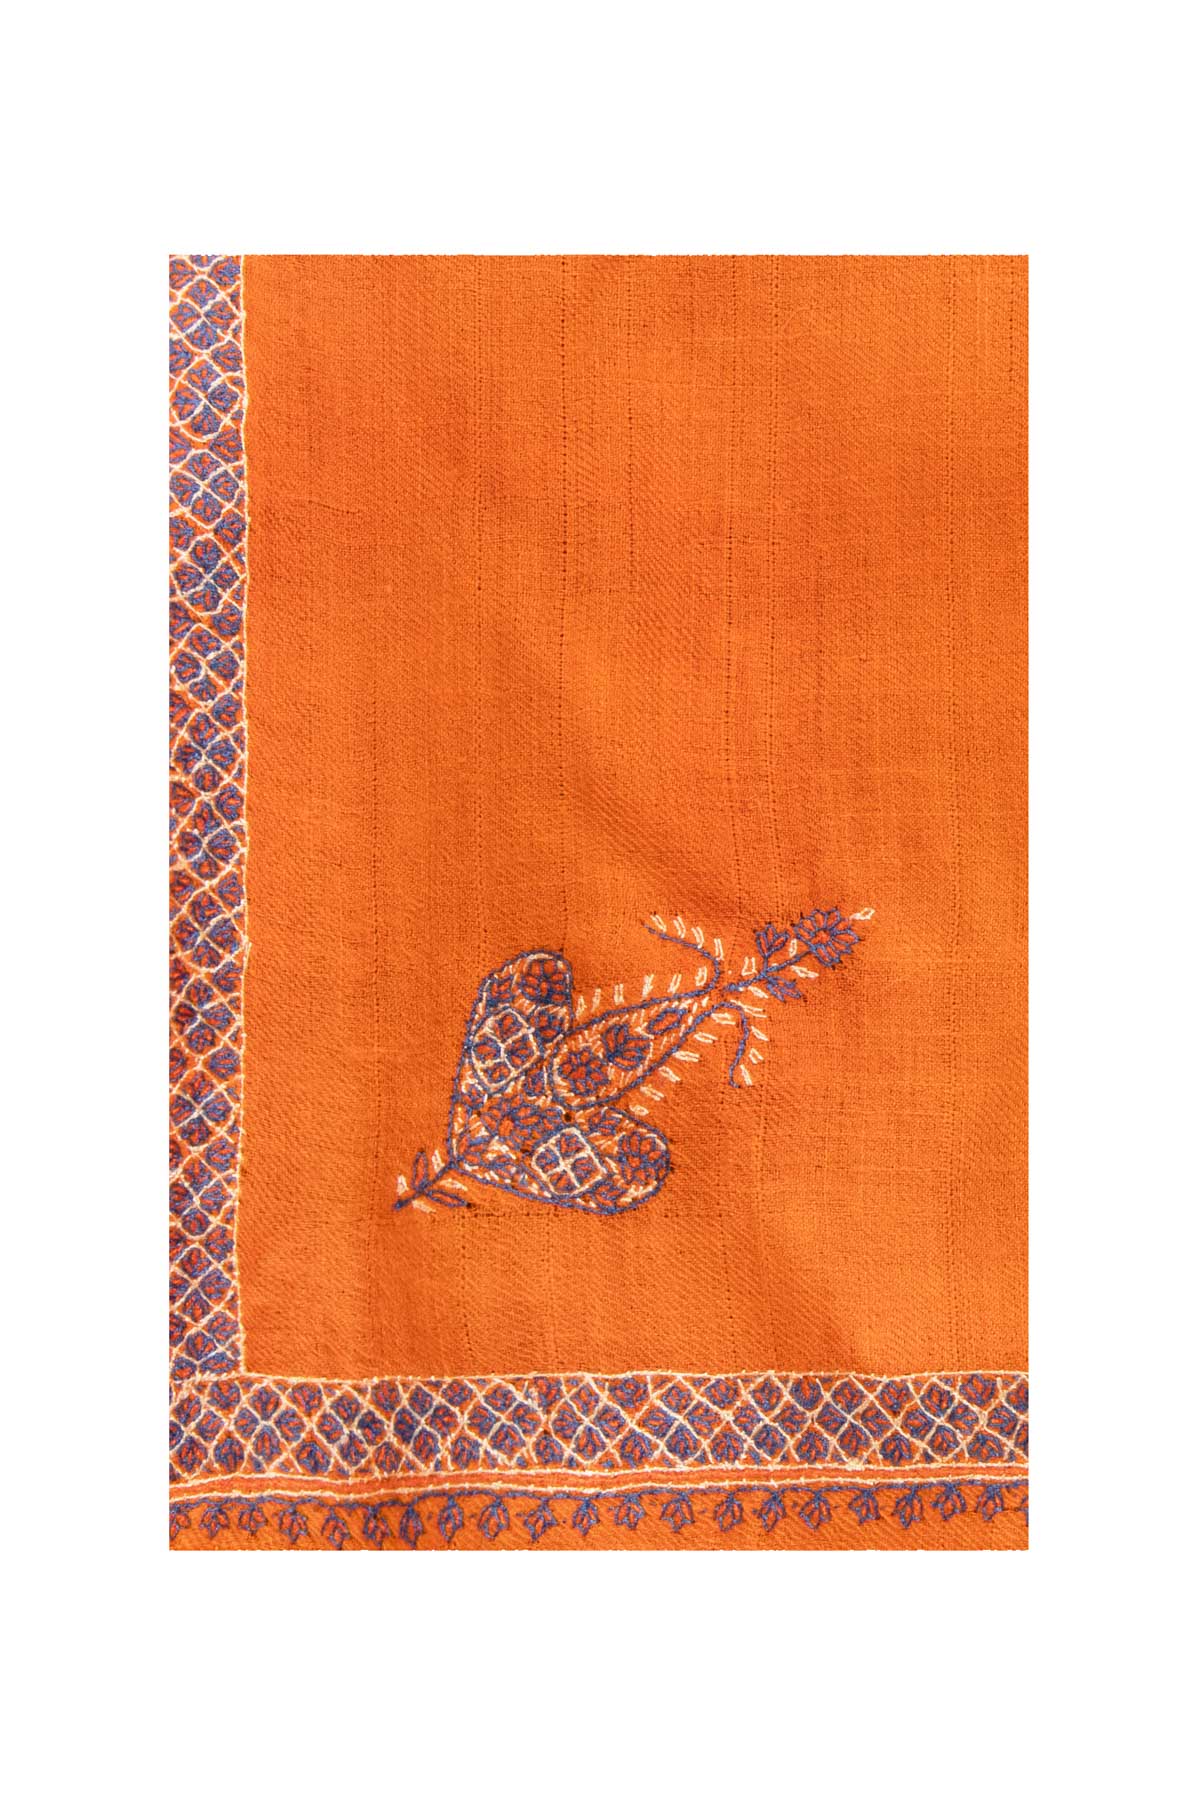 Border Embroidered Cashmere Pashmina Shawl - Bright Orange